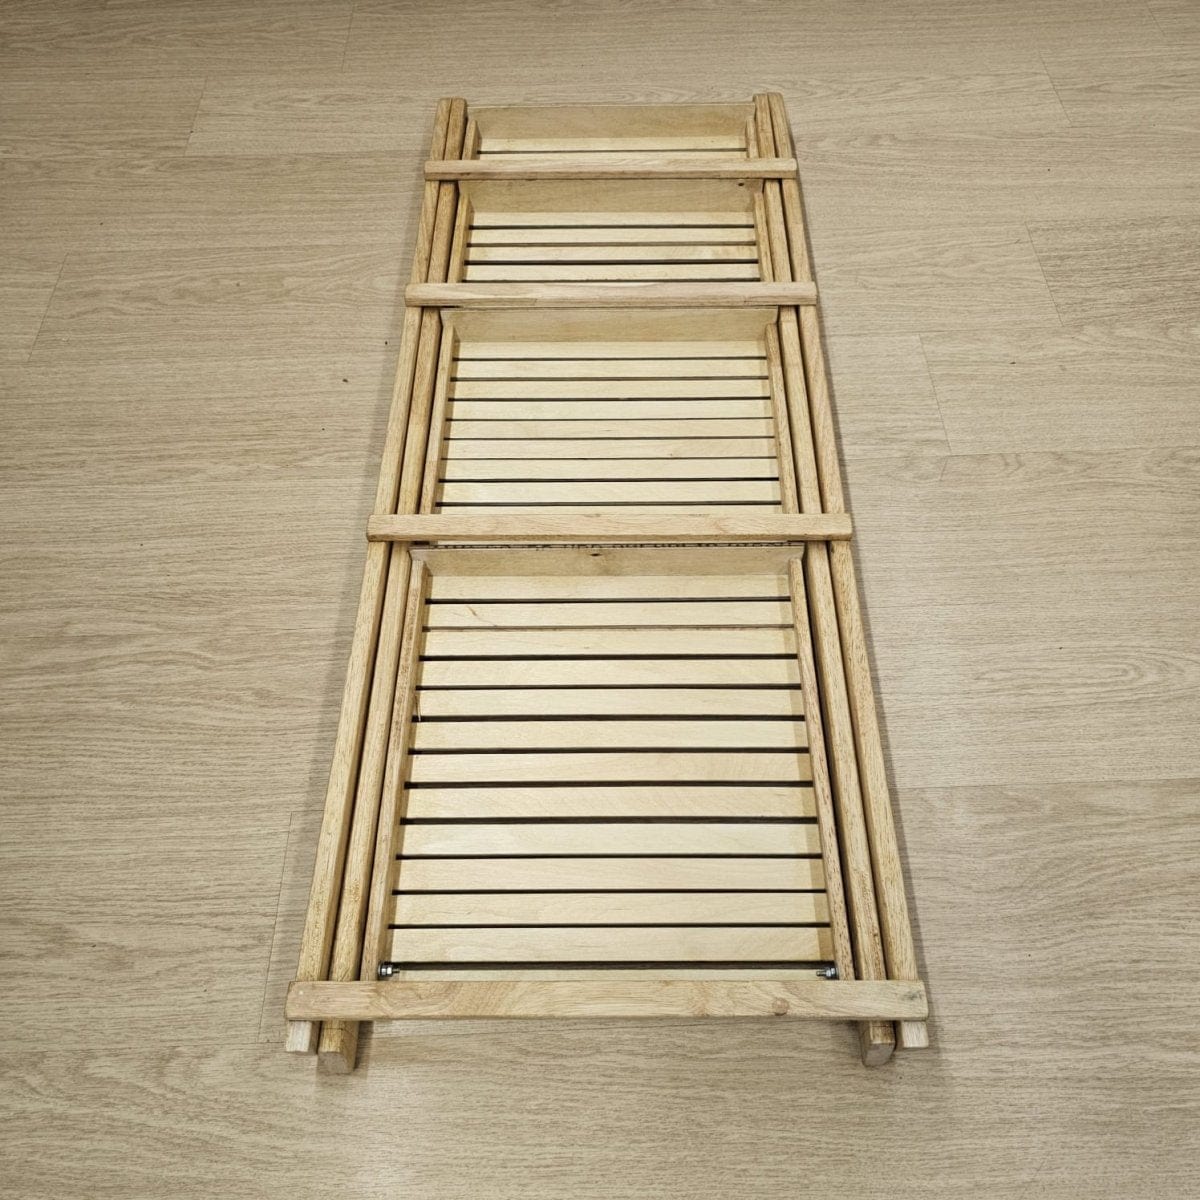 Barish Multi-purpose Floor Standing Stands (Set of 3) Rubberwood BH0152 Best Home Decor Handcrafted